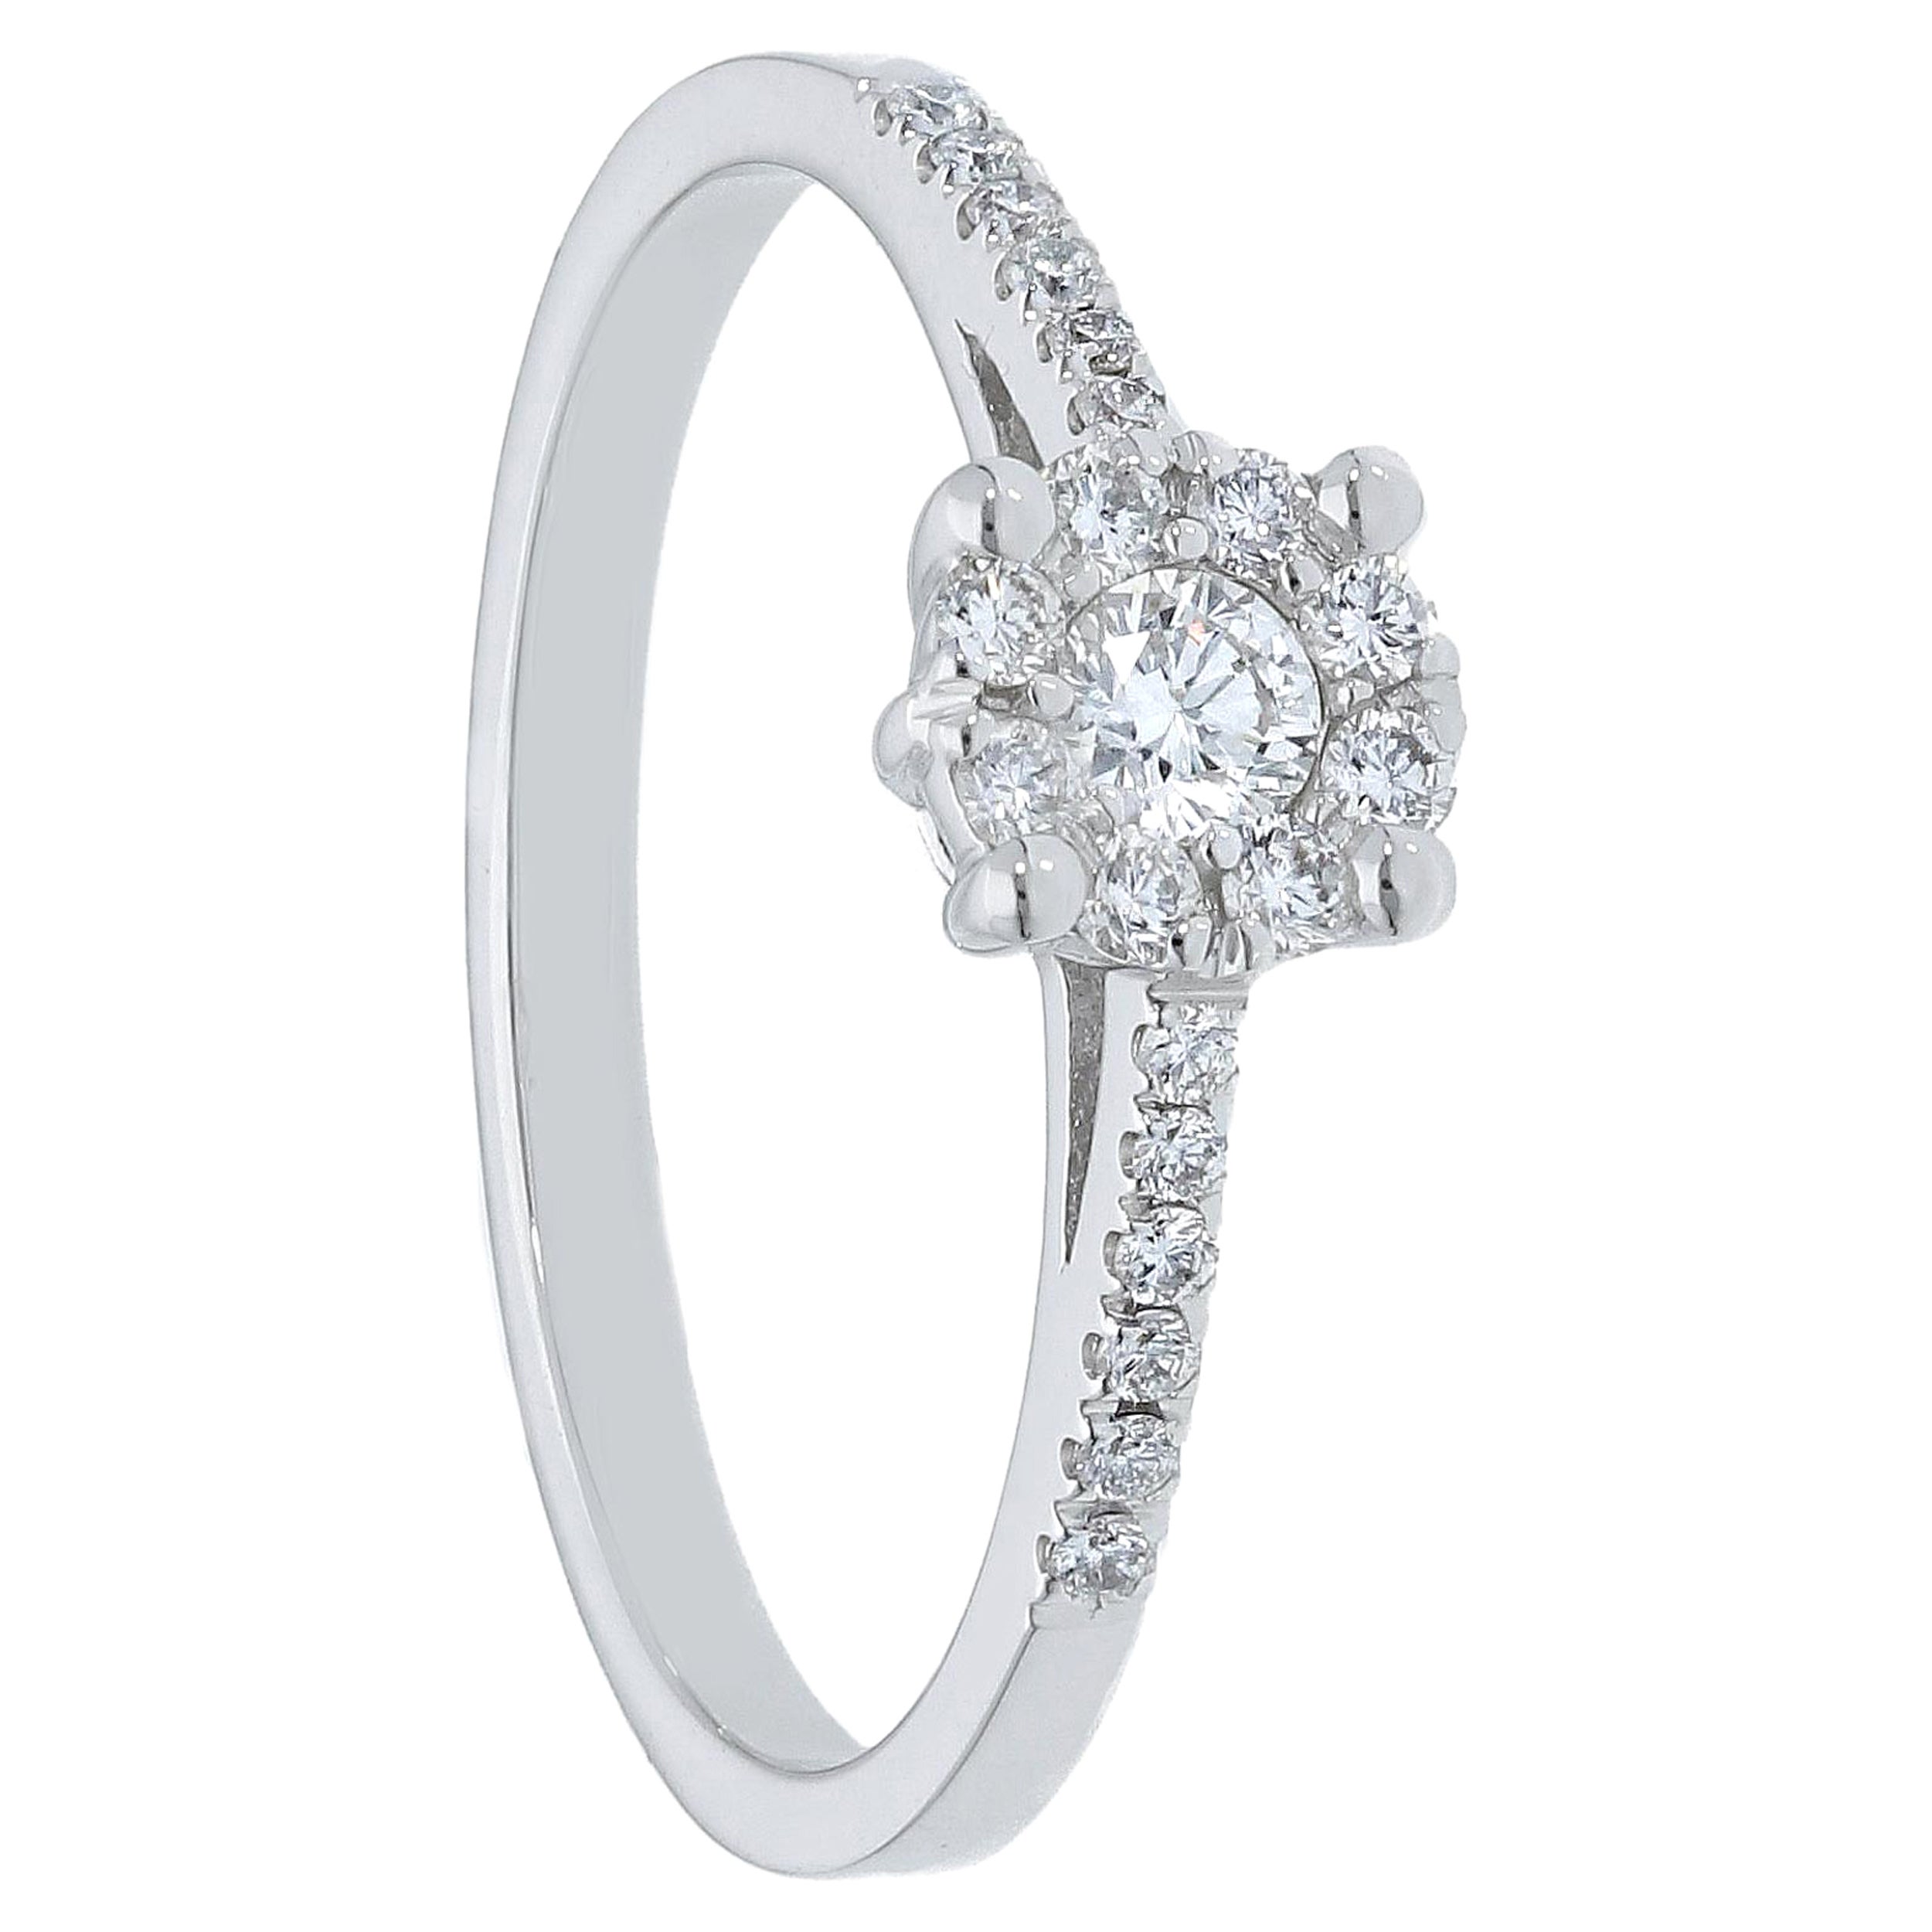 18K White Gold Pradera Magic Engagement Ring with Diamonds